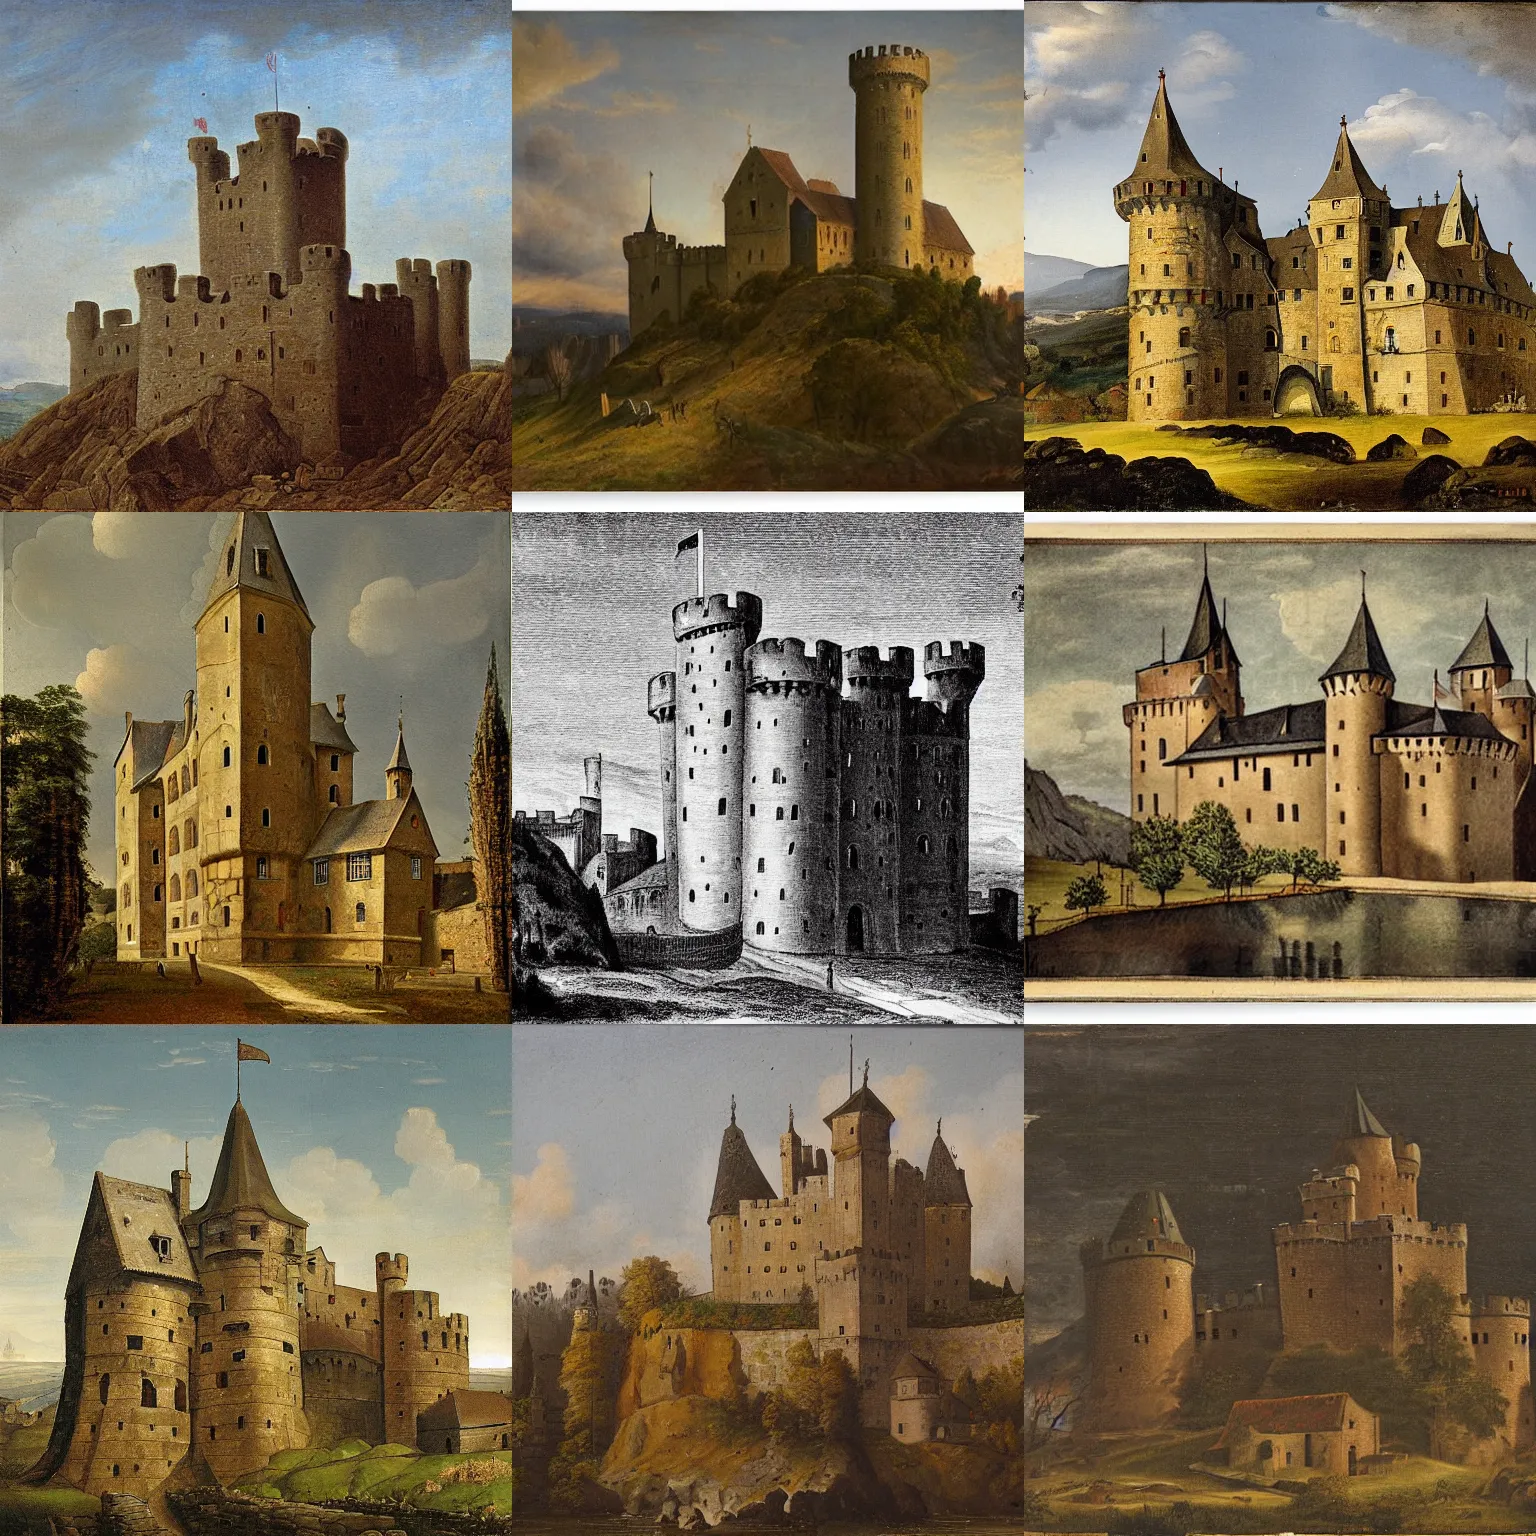 Prompt: medieval castle, by ludwig meidner